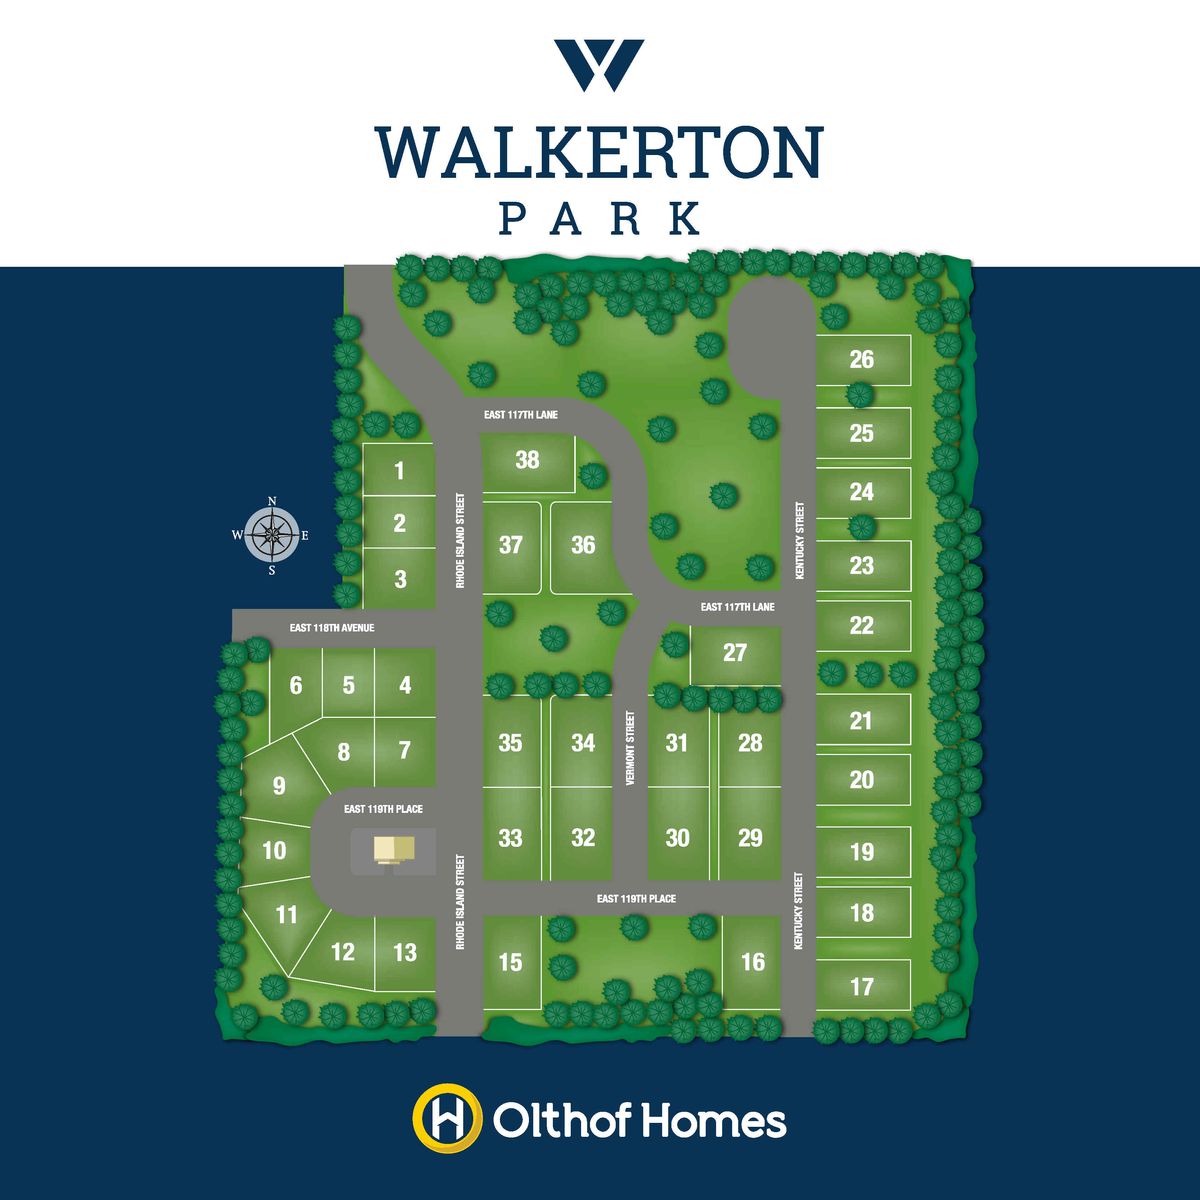 Walkerton Park